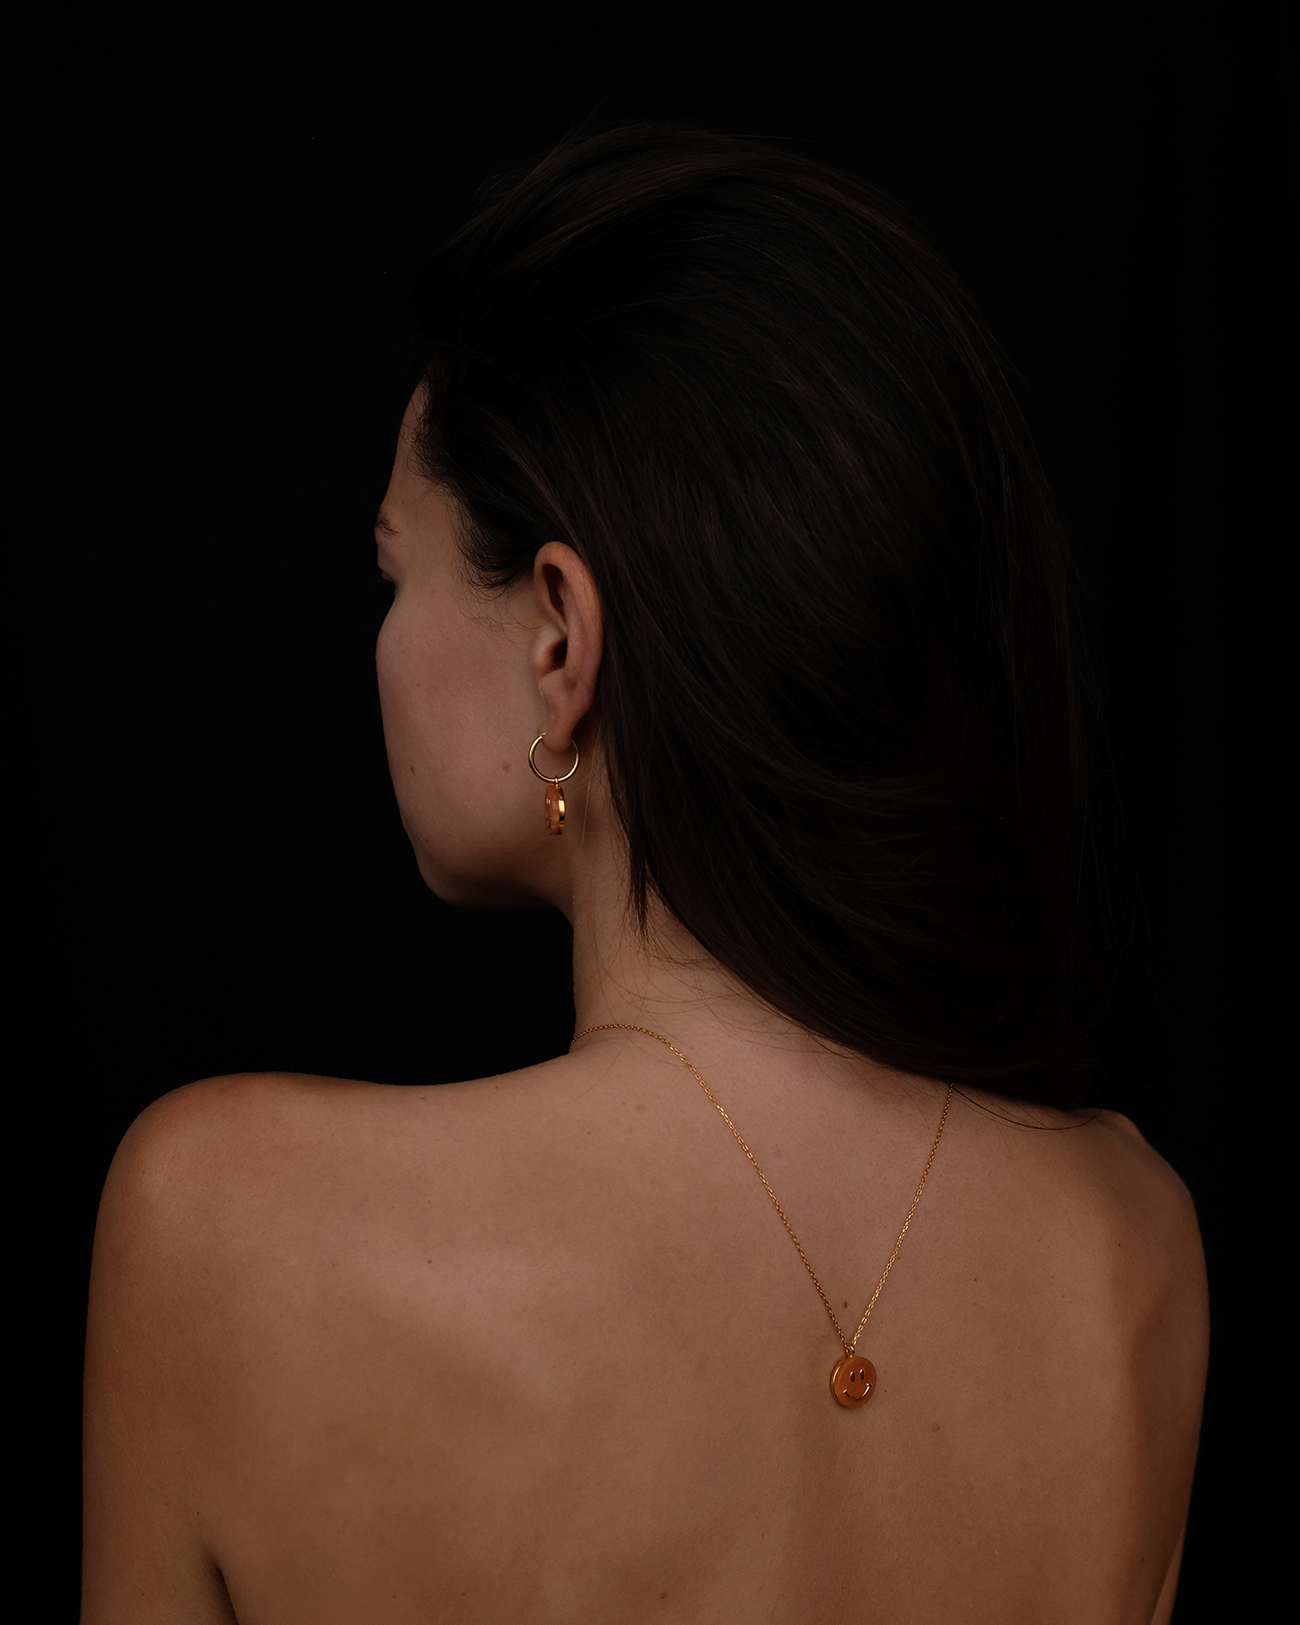 metaformi_design_jewelry_smiley_necklace_earrings_model_18